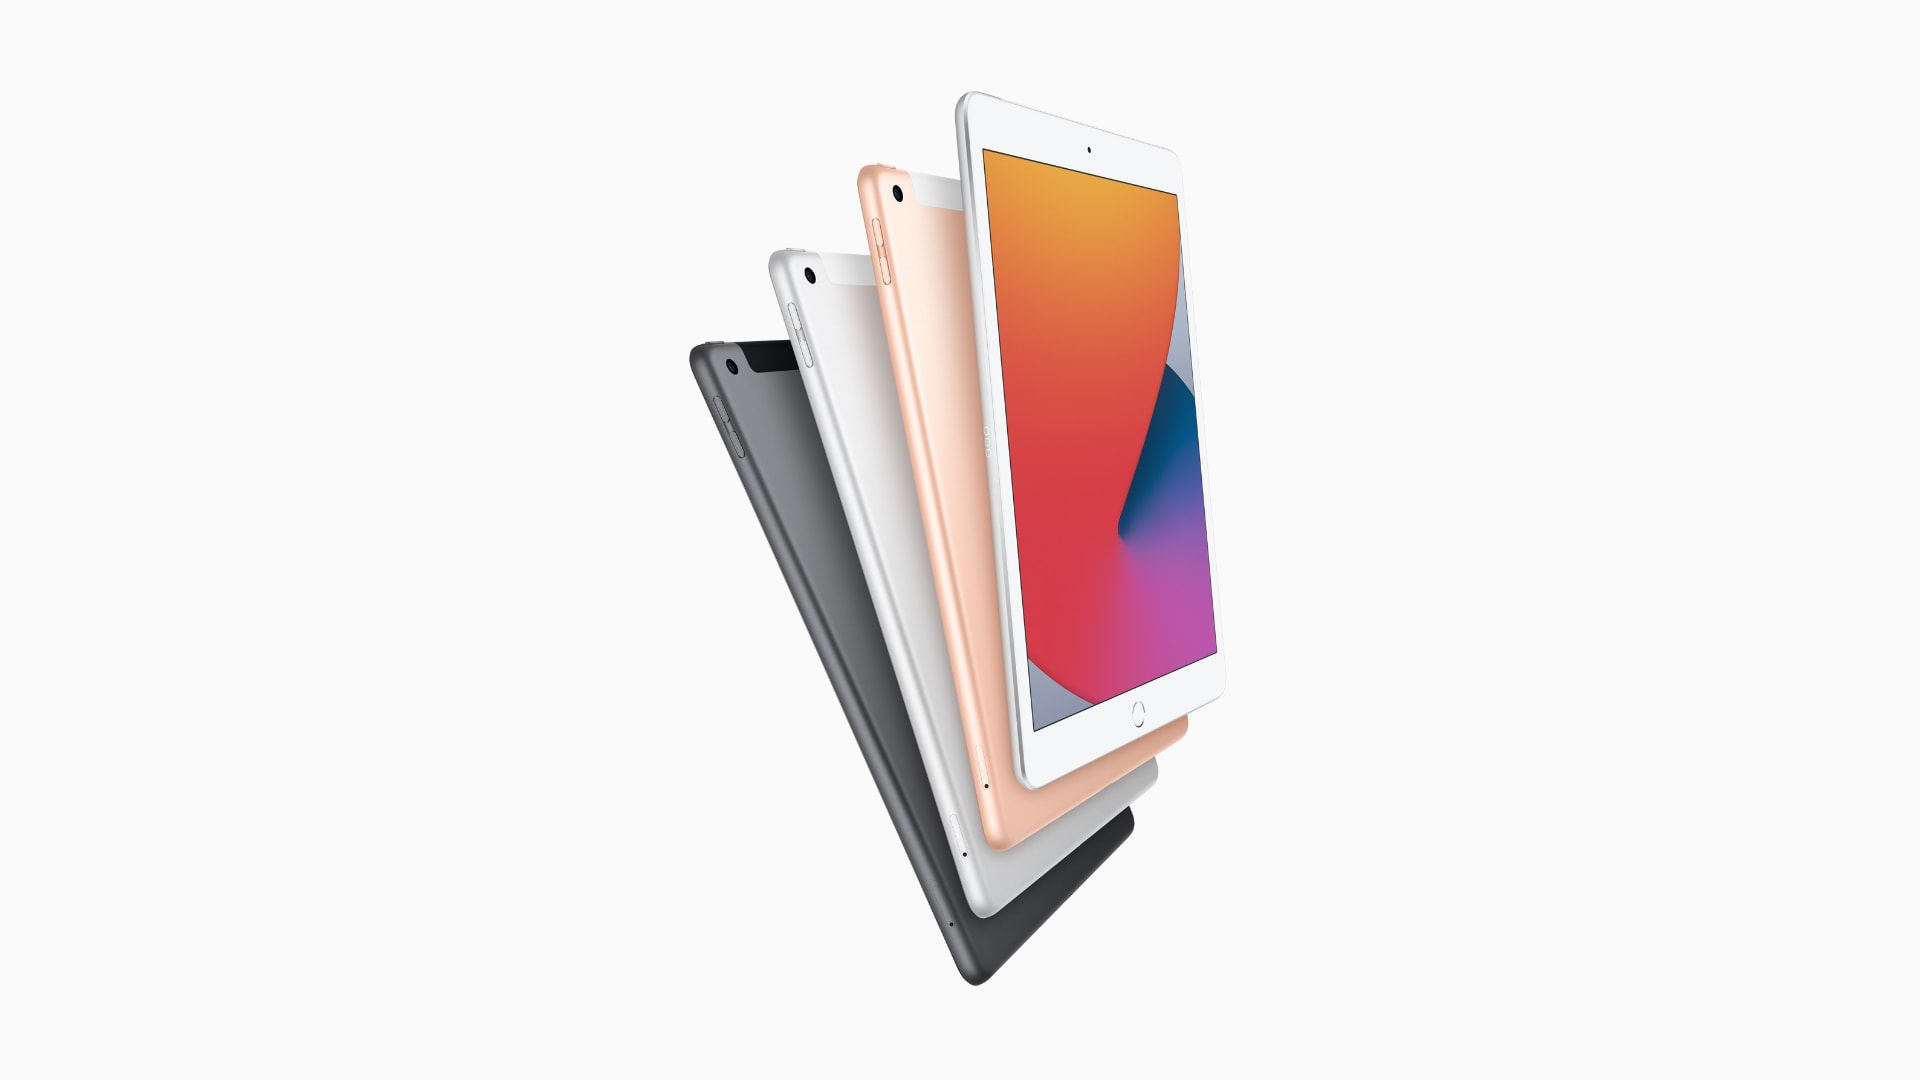 New 2020 iPad colors